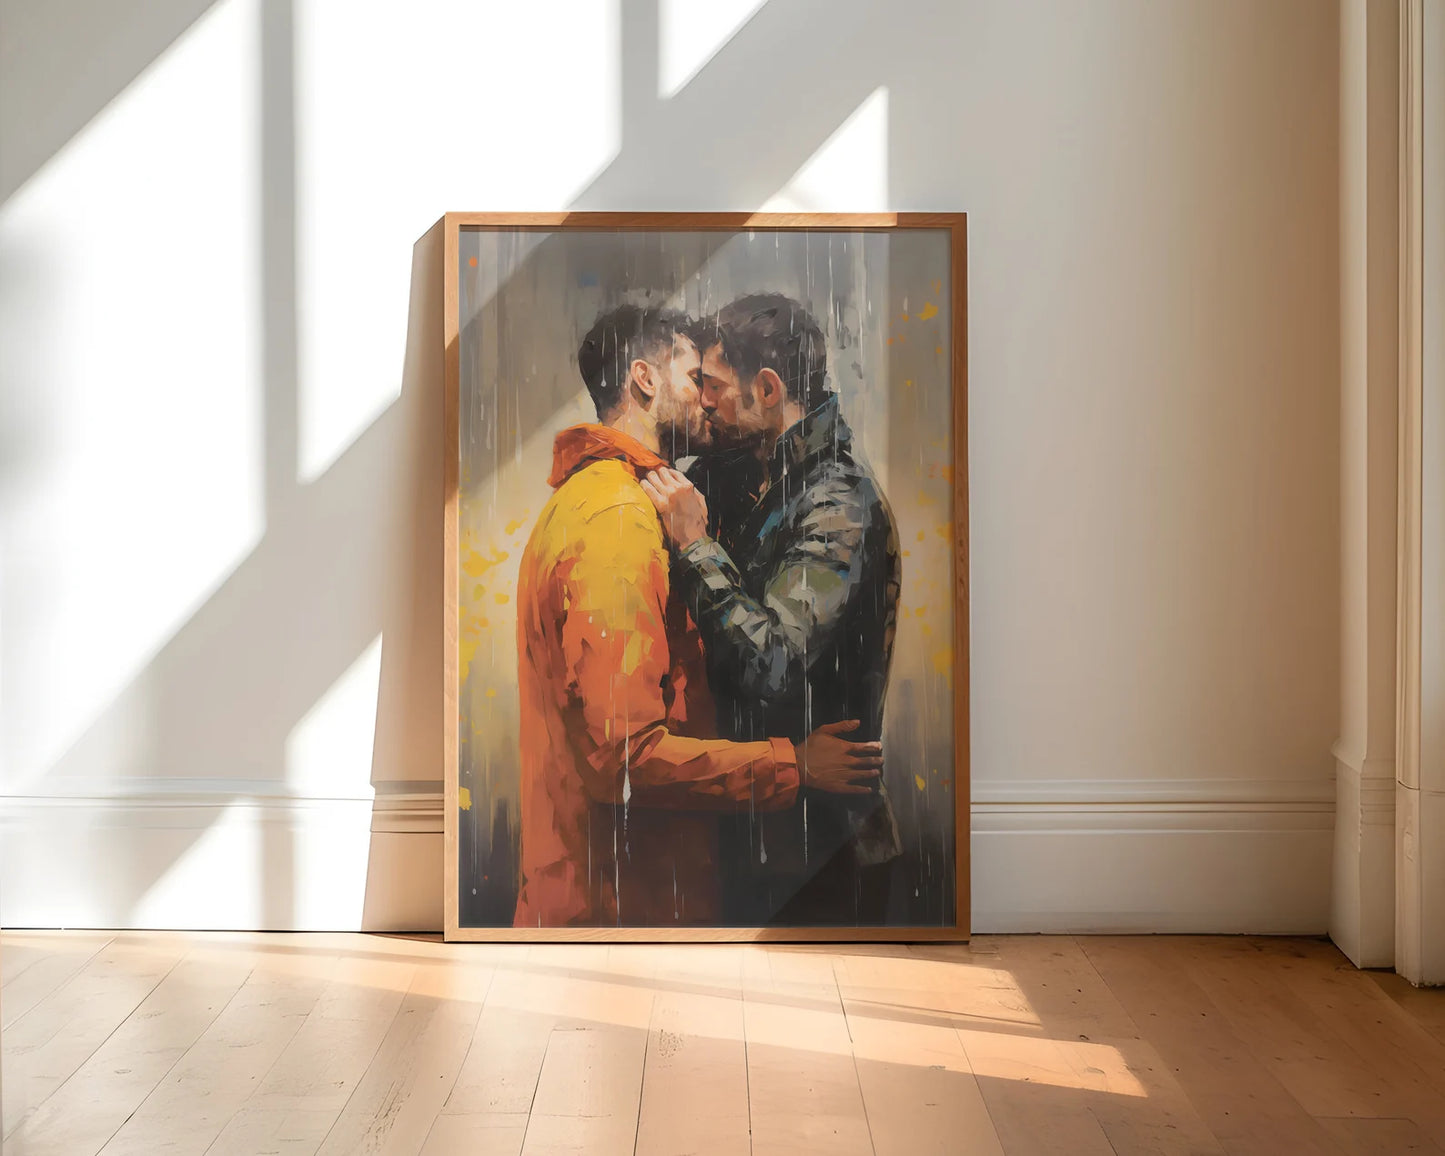 Fall Lovers | Home Decor, Gay Art Print Poster